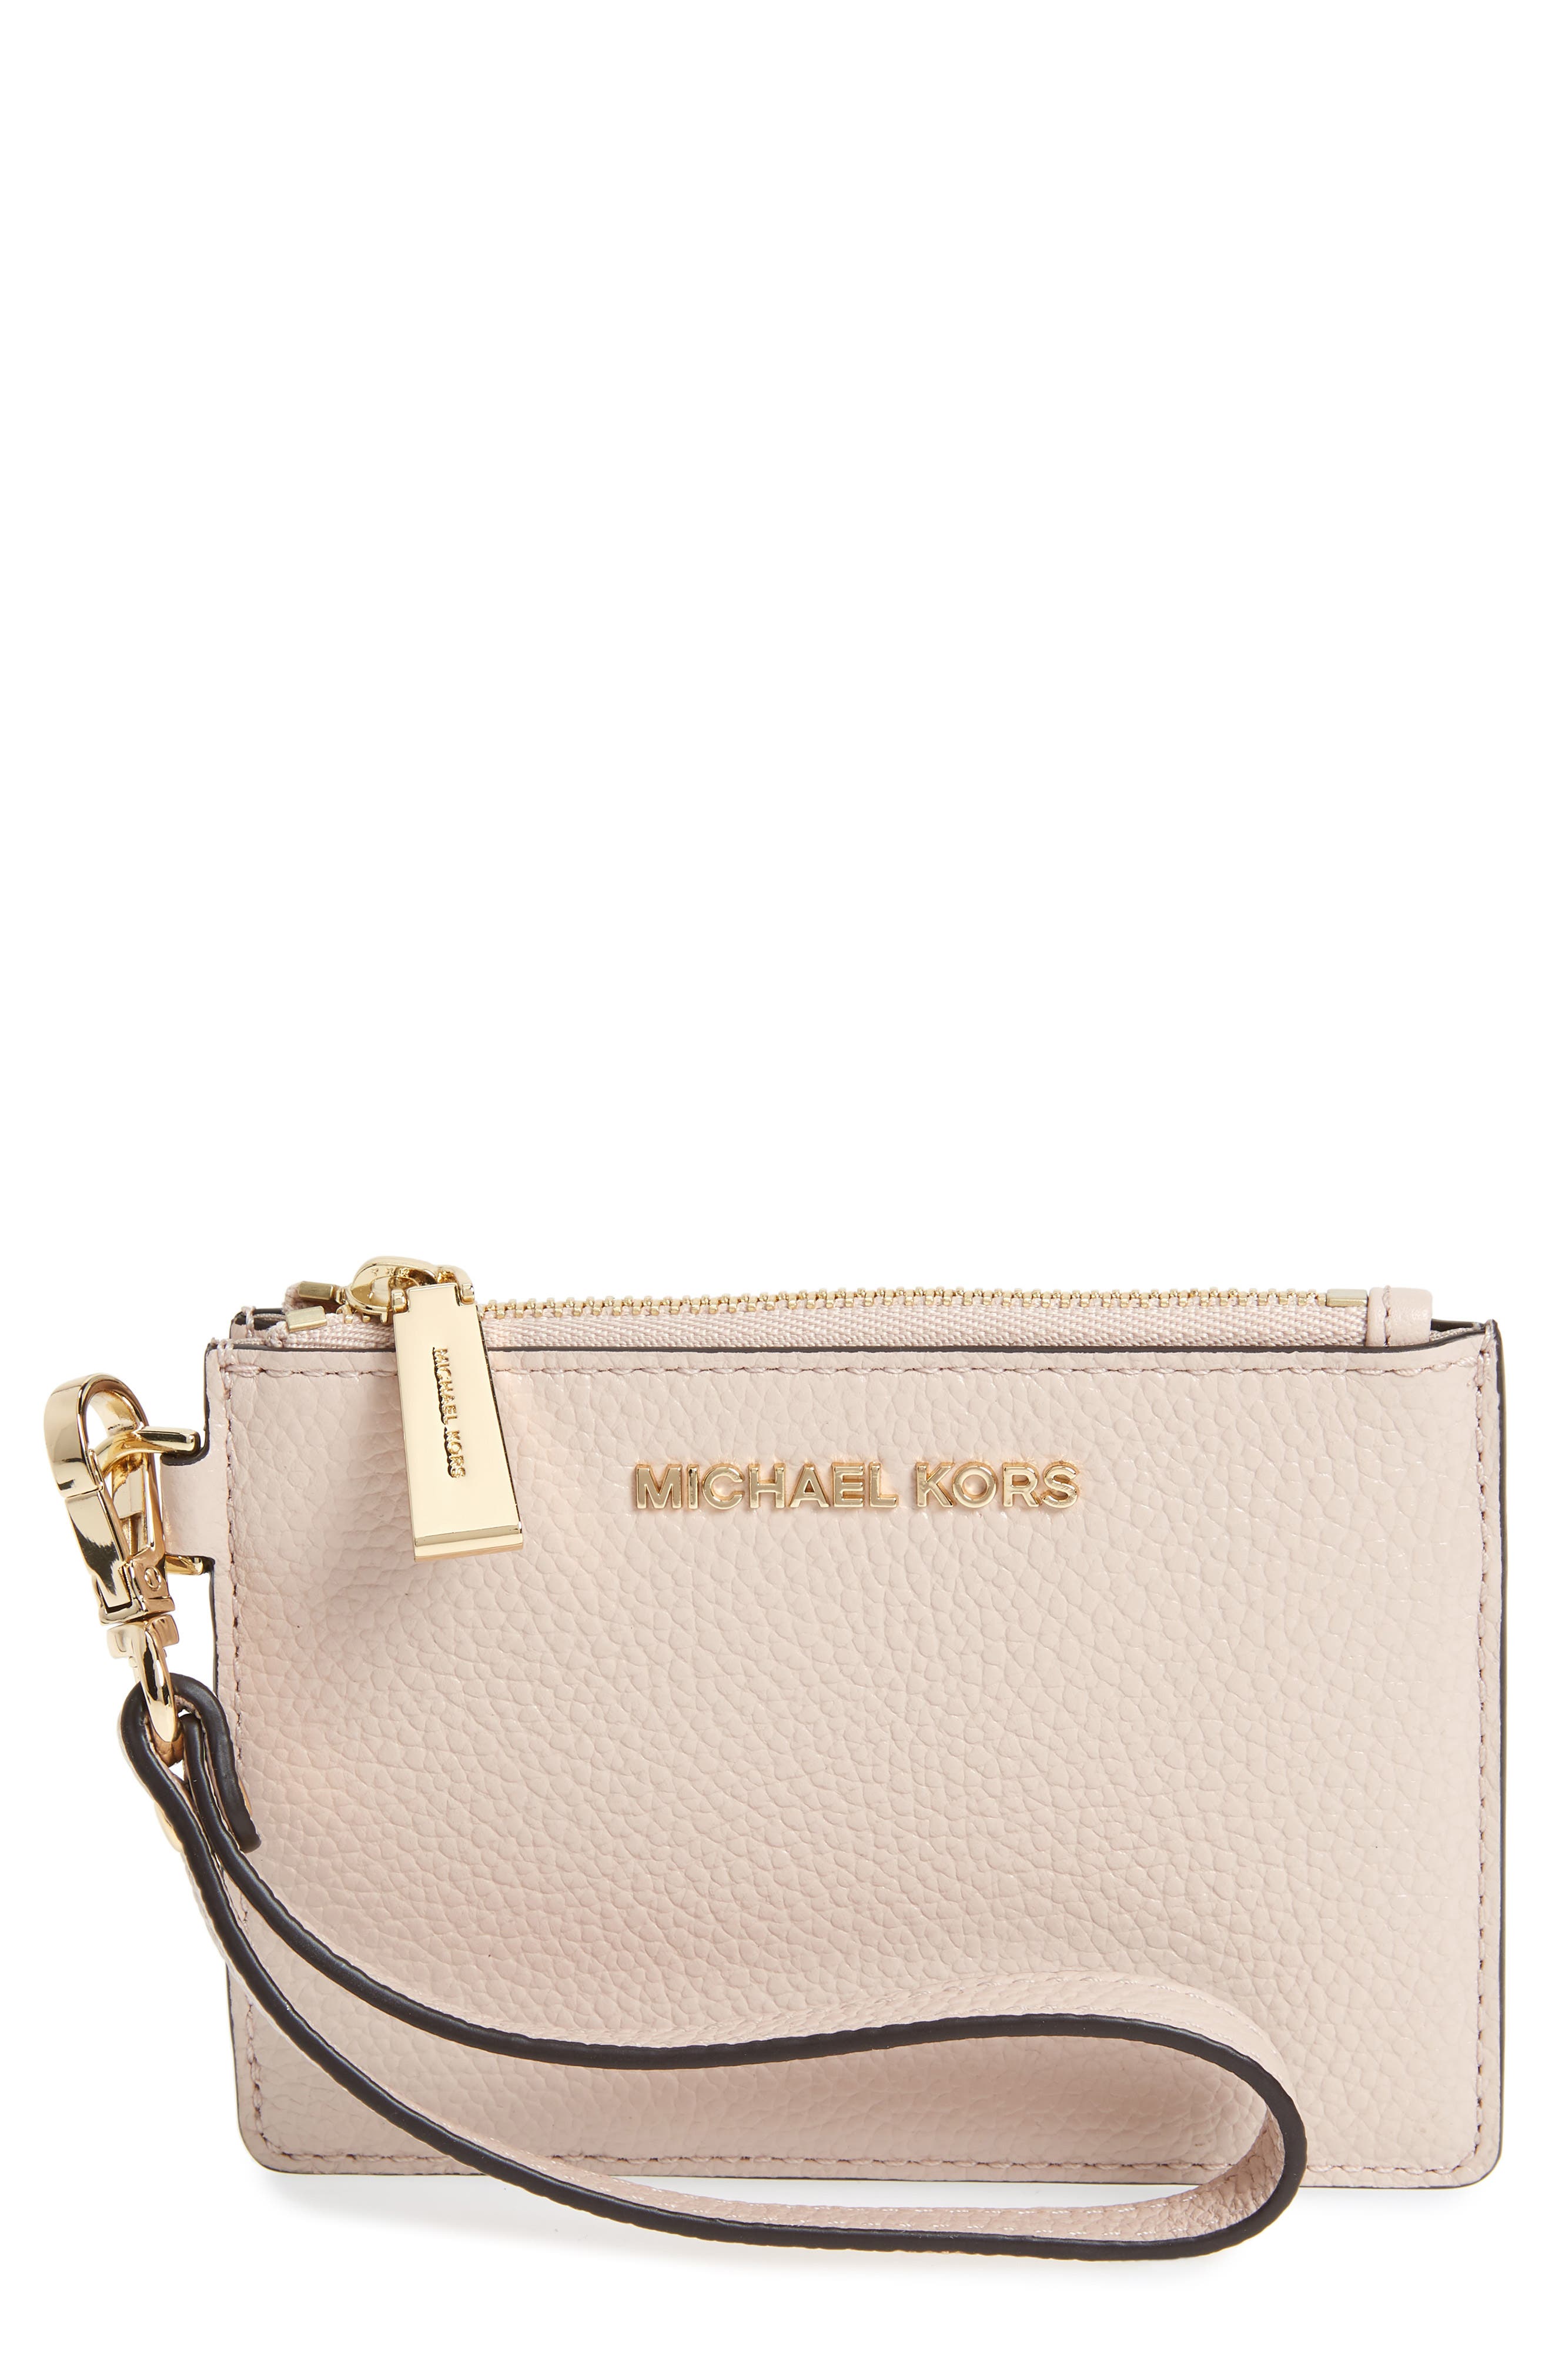 michael kors small pink purse